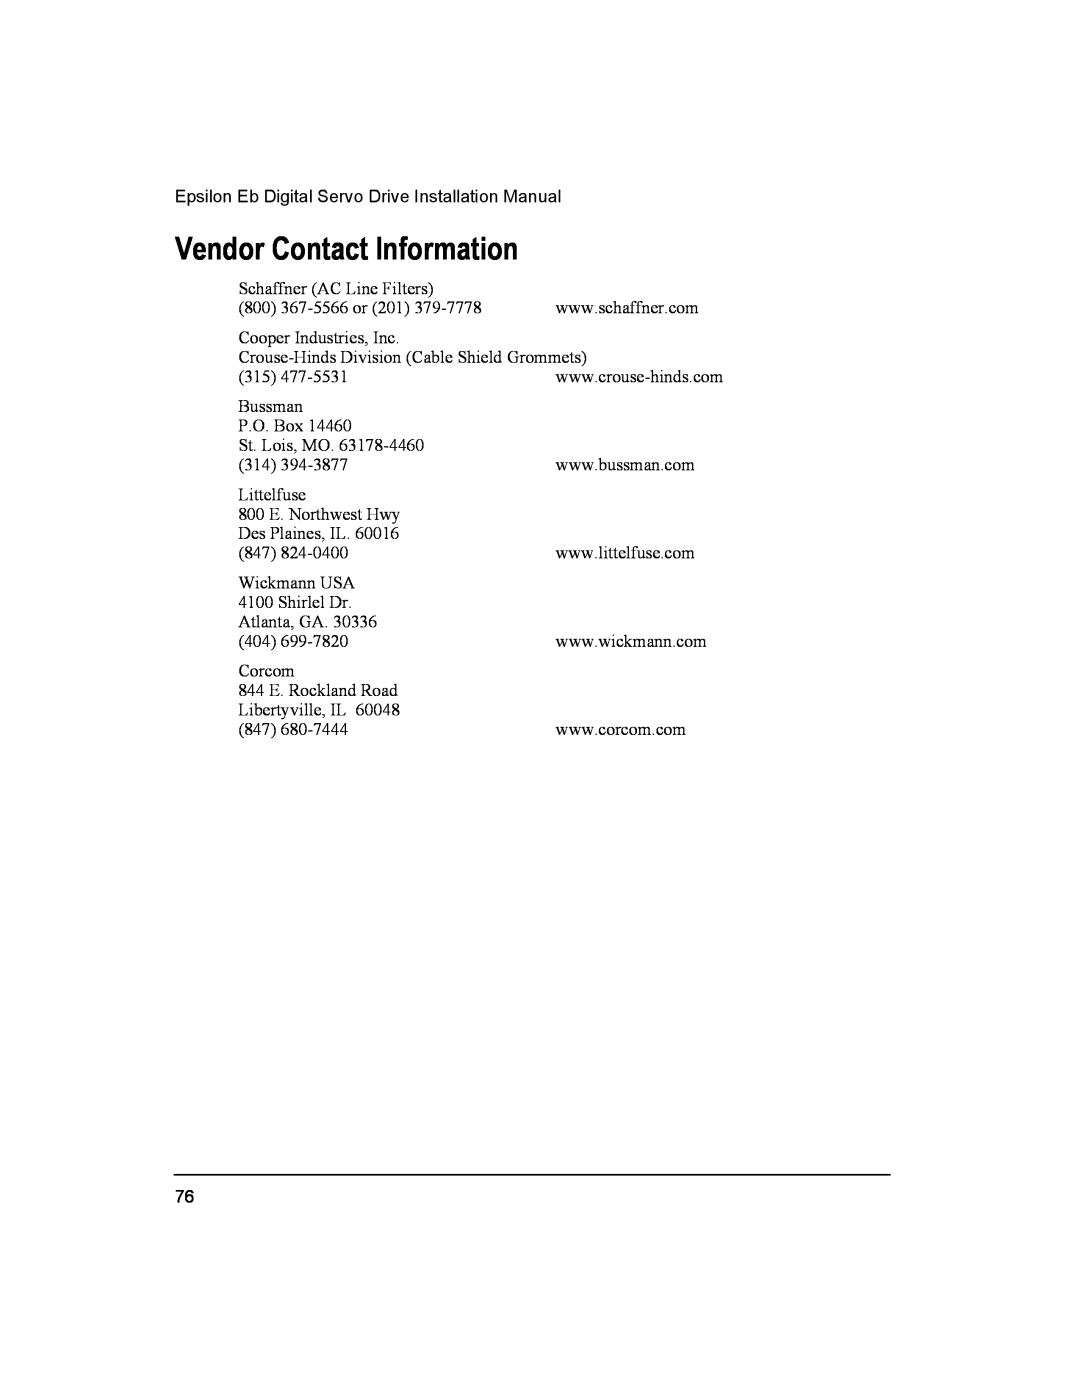 Emerson 400501-05, Epsilon Eb Digital Servo Drive installation manual Vendor Contact Information 